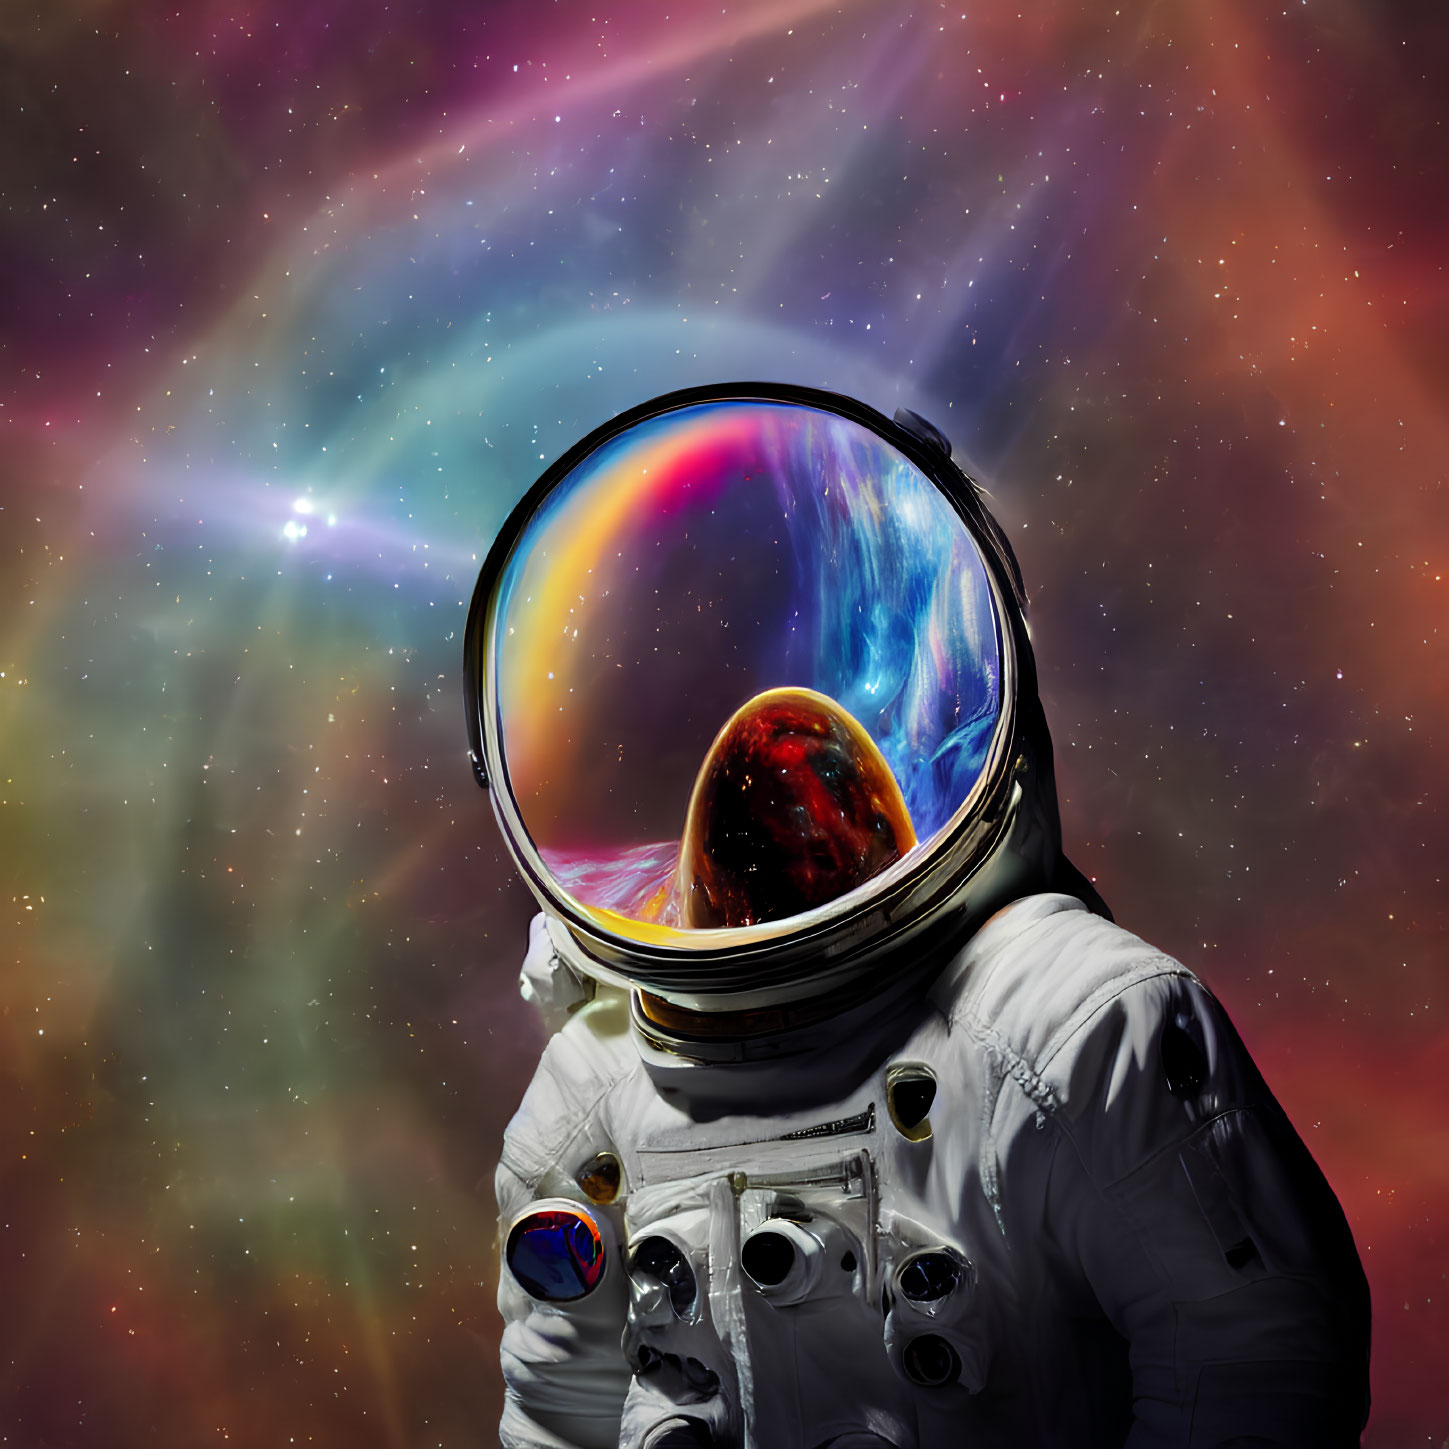 Astronaut in reflective visor with cosmic scene